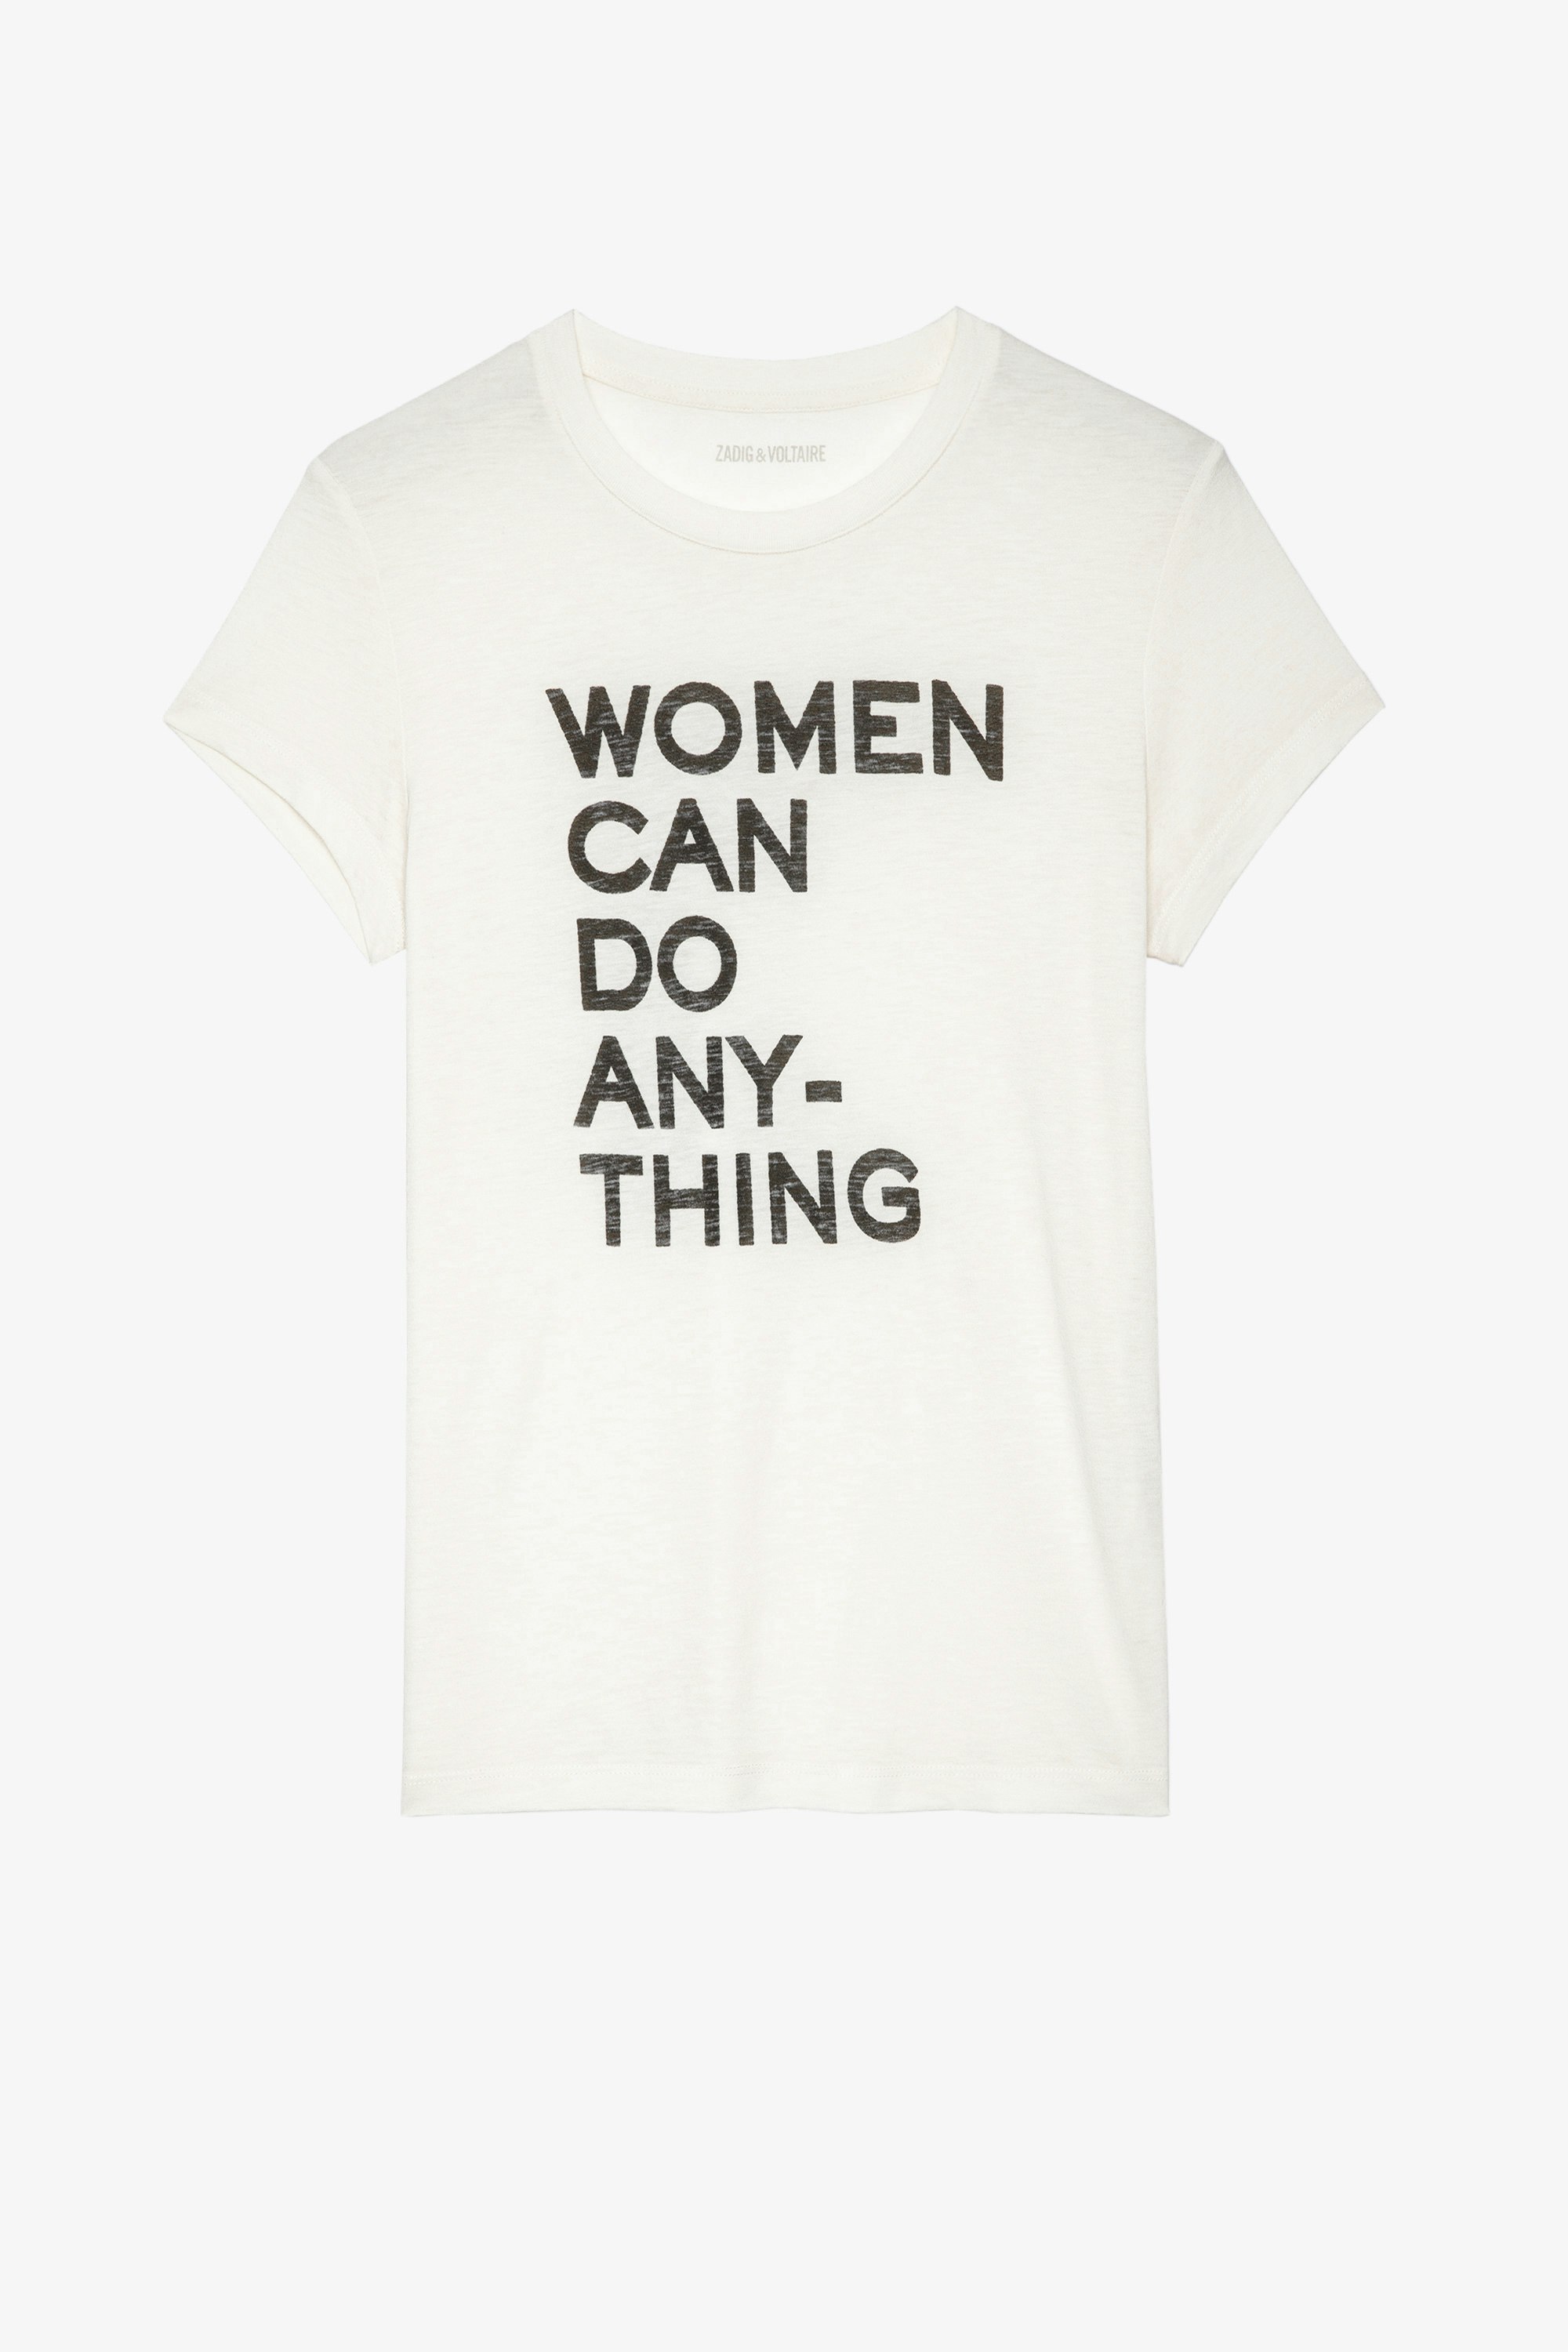 Camiseta Walk Women can do anything Camiseta beige de algodón «Women can do anything» para mujer